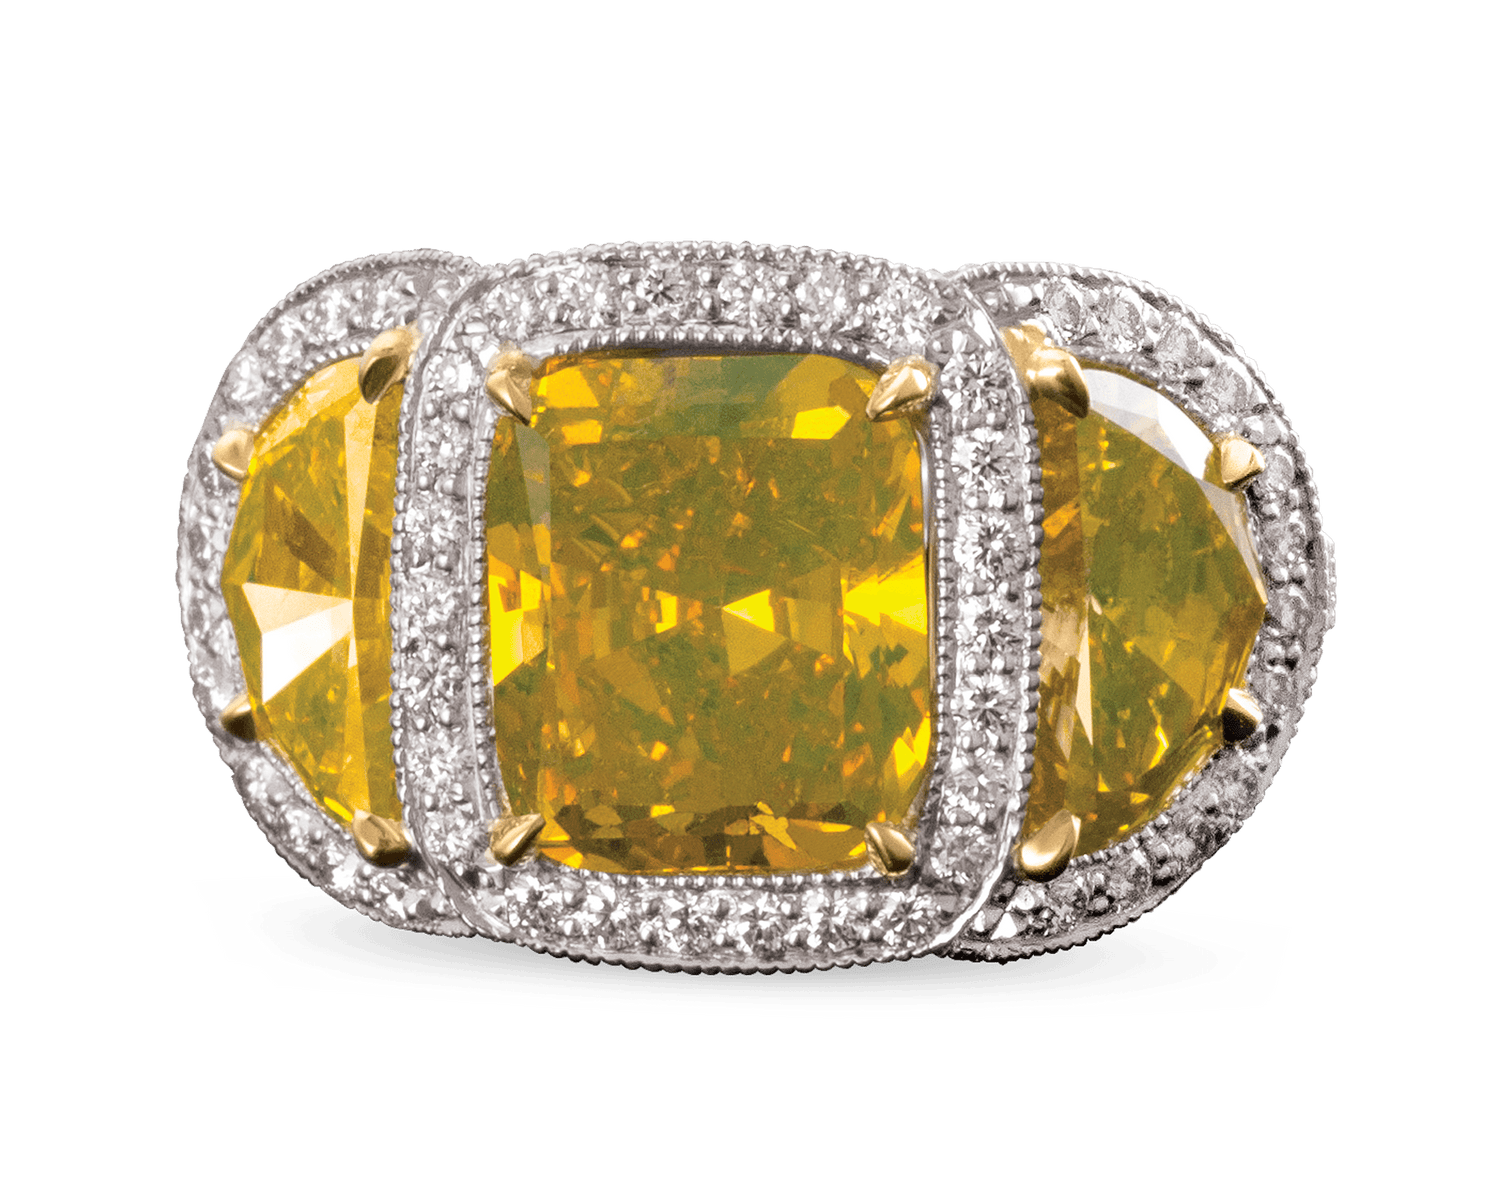 Fancy Intense Greenish-Yellow Diamond Ring, 6.16 Carats